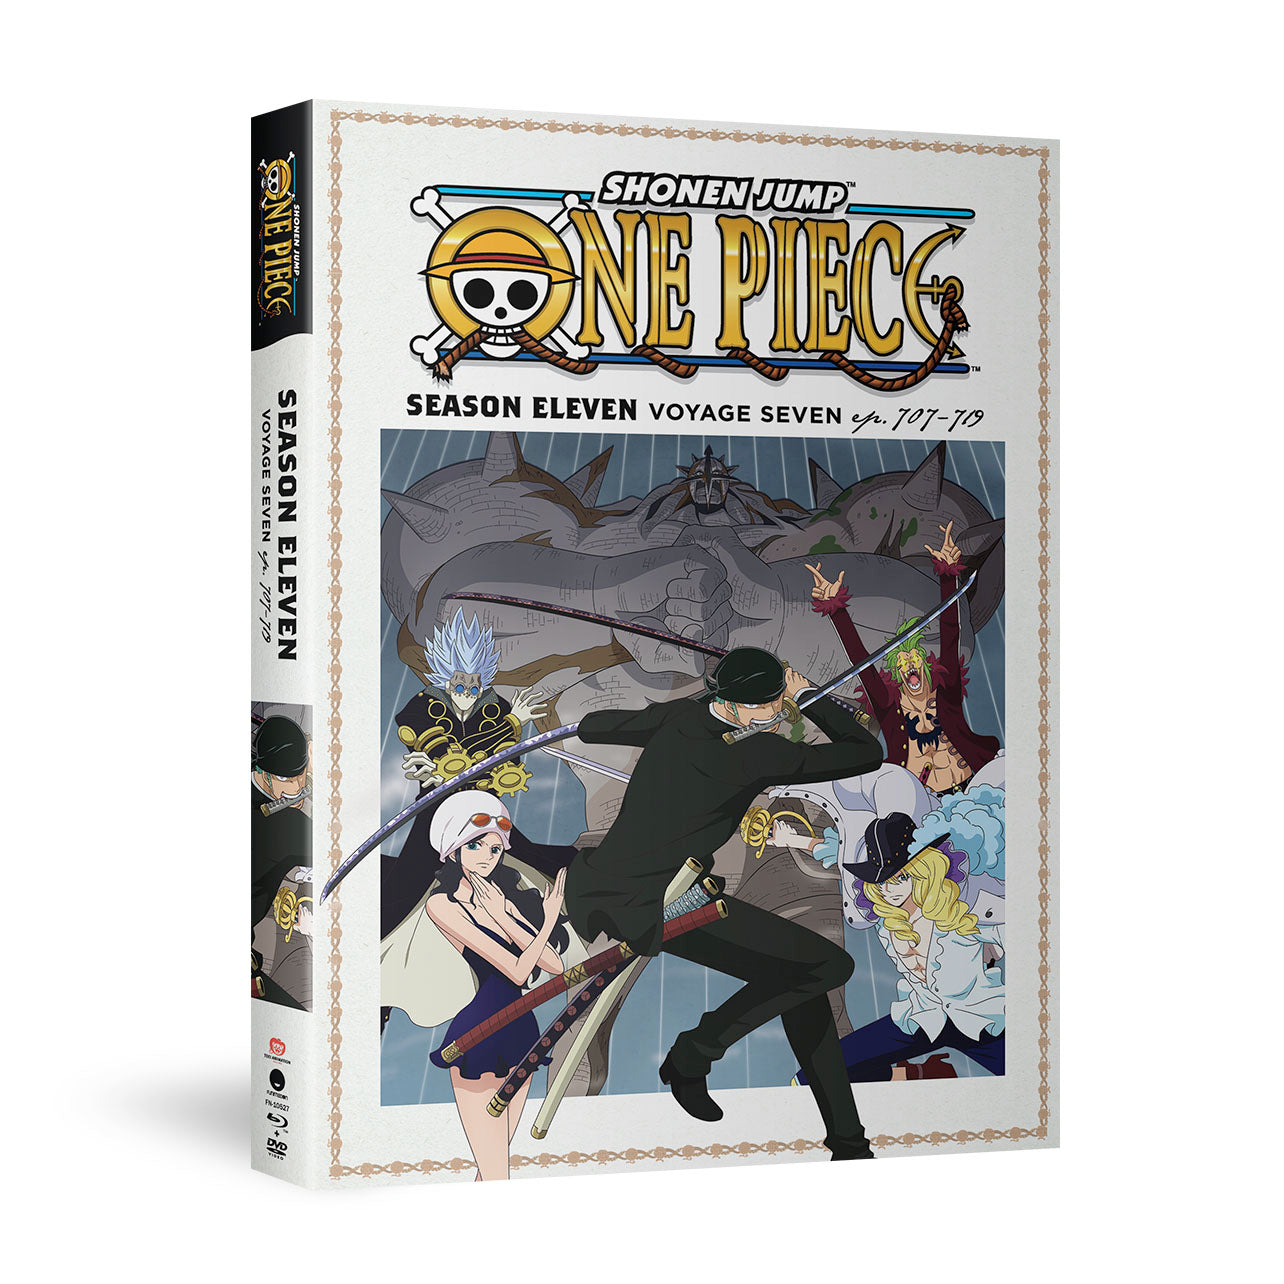 One Piece - Season 11 Voyage 7 - BD/DVD image count 1